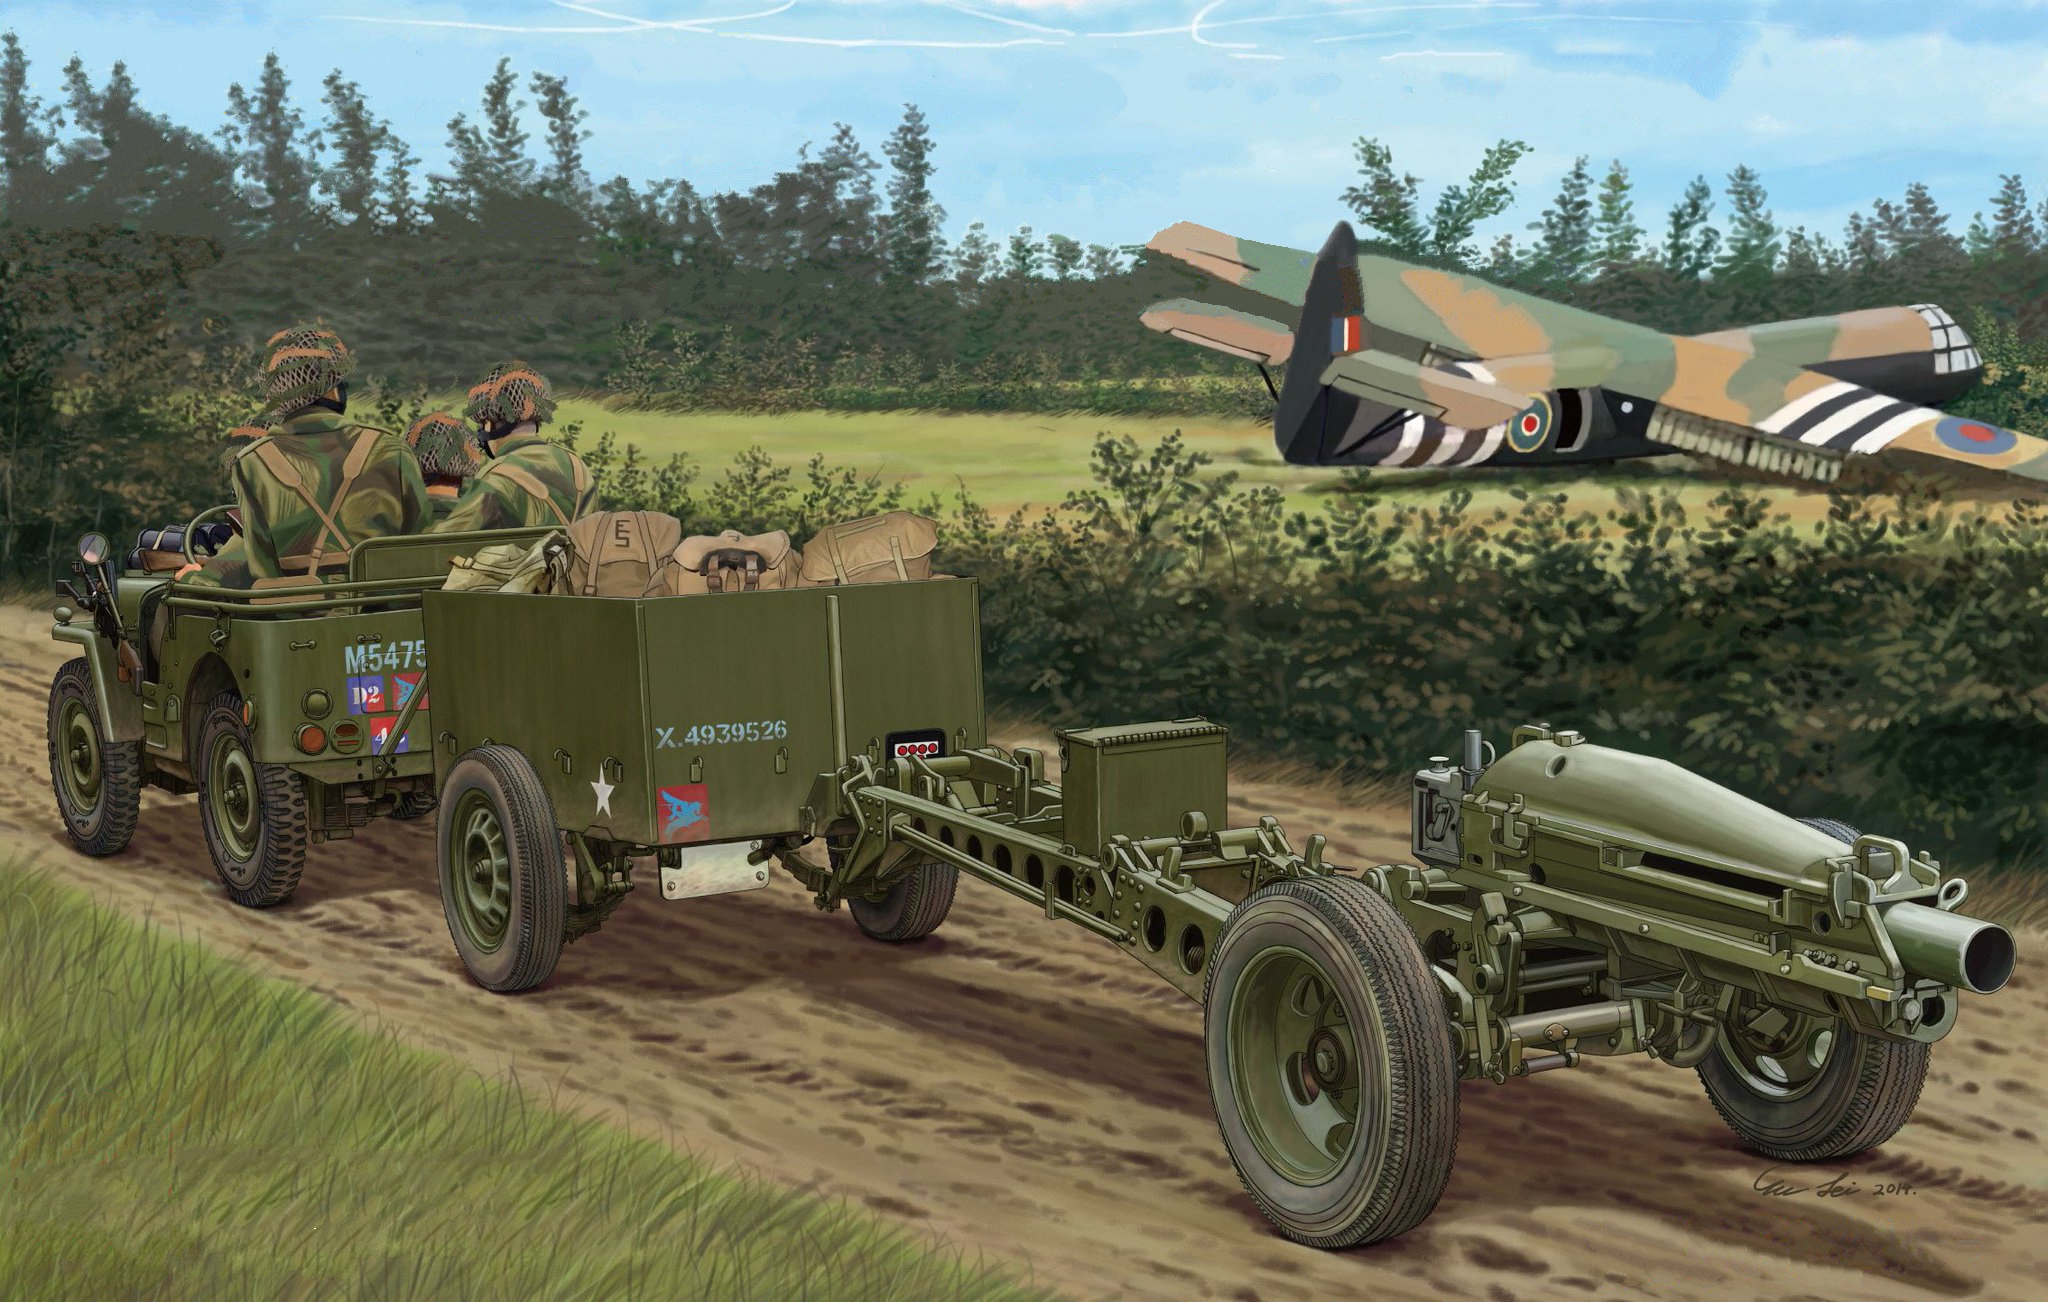 рисунок British Airborne 75mm Pack Howitzer